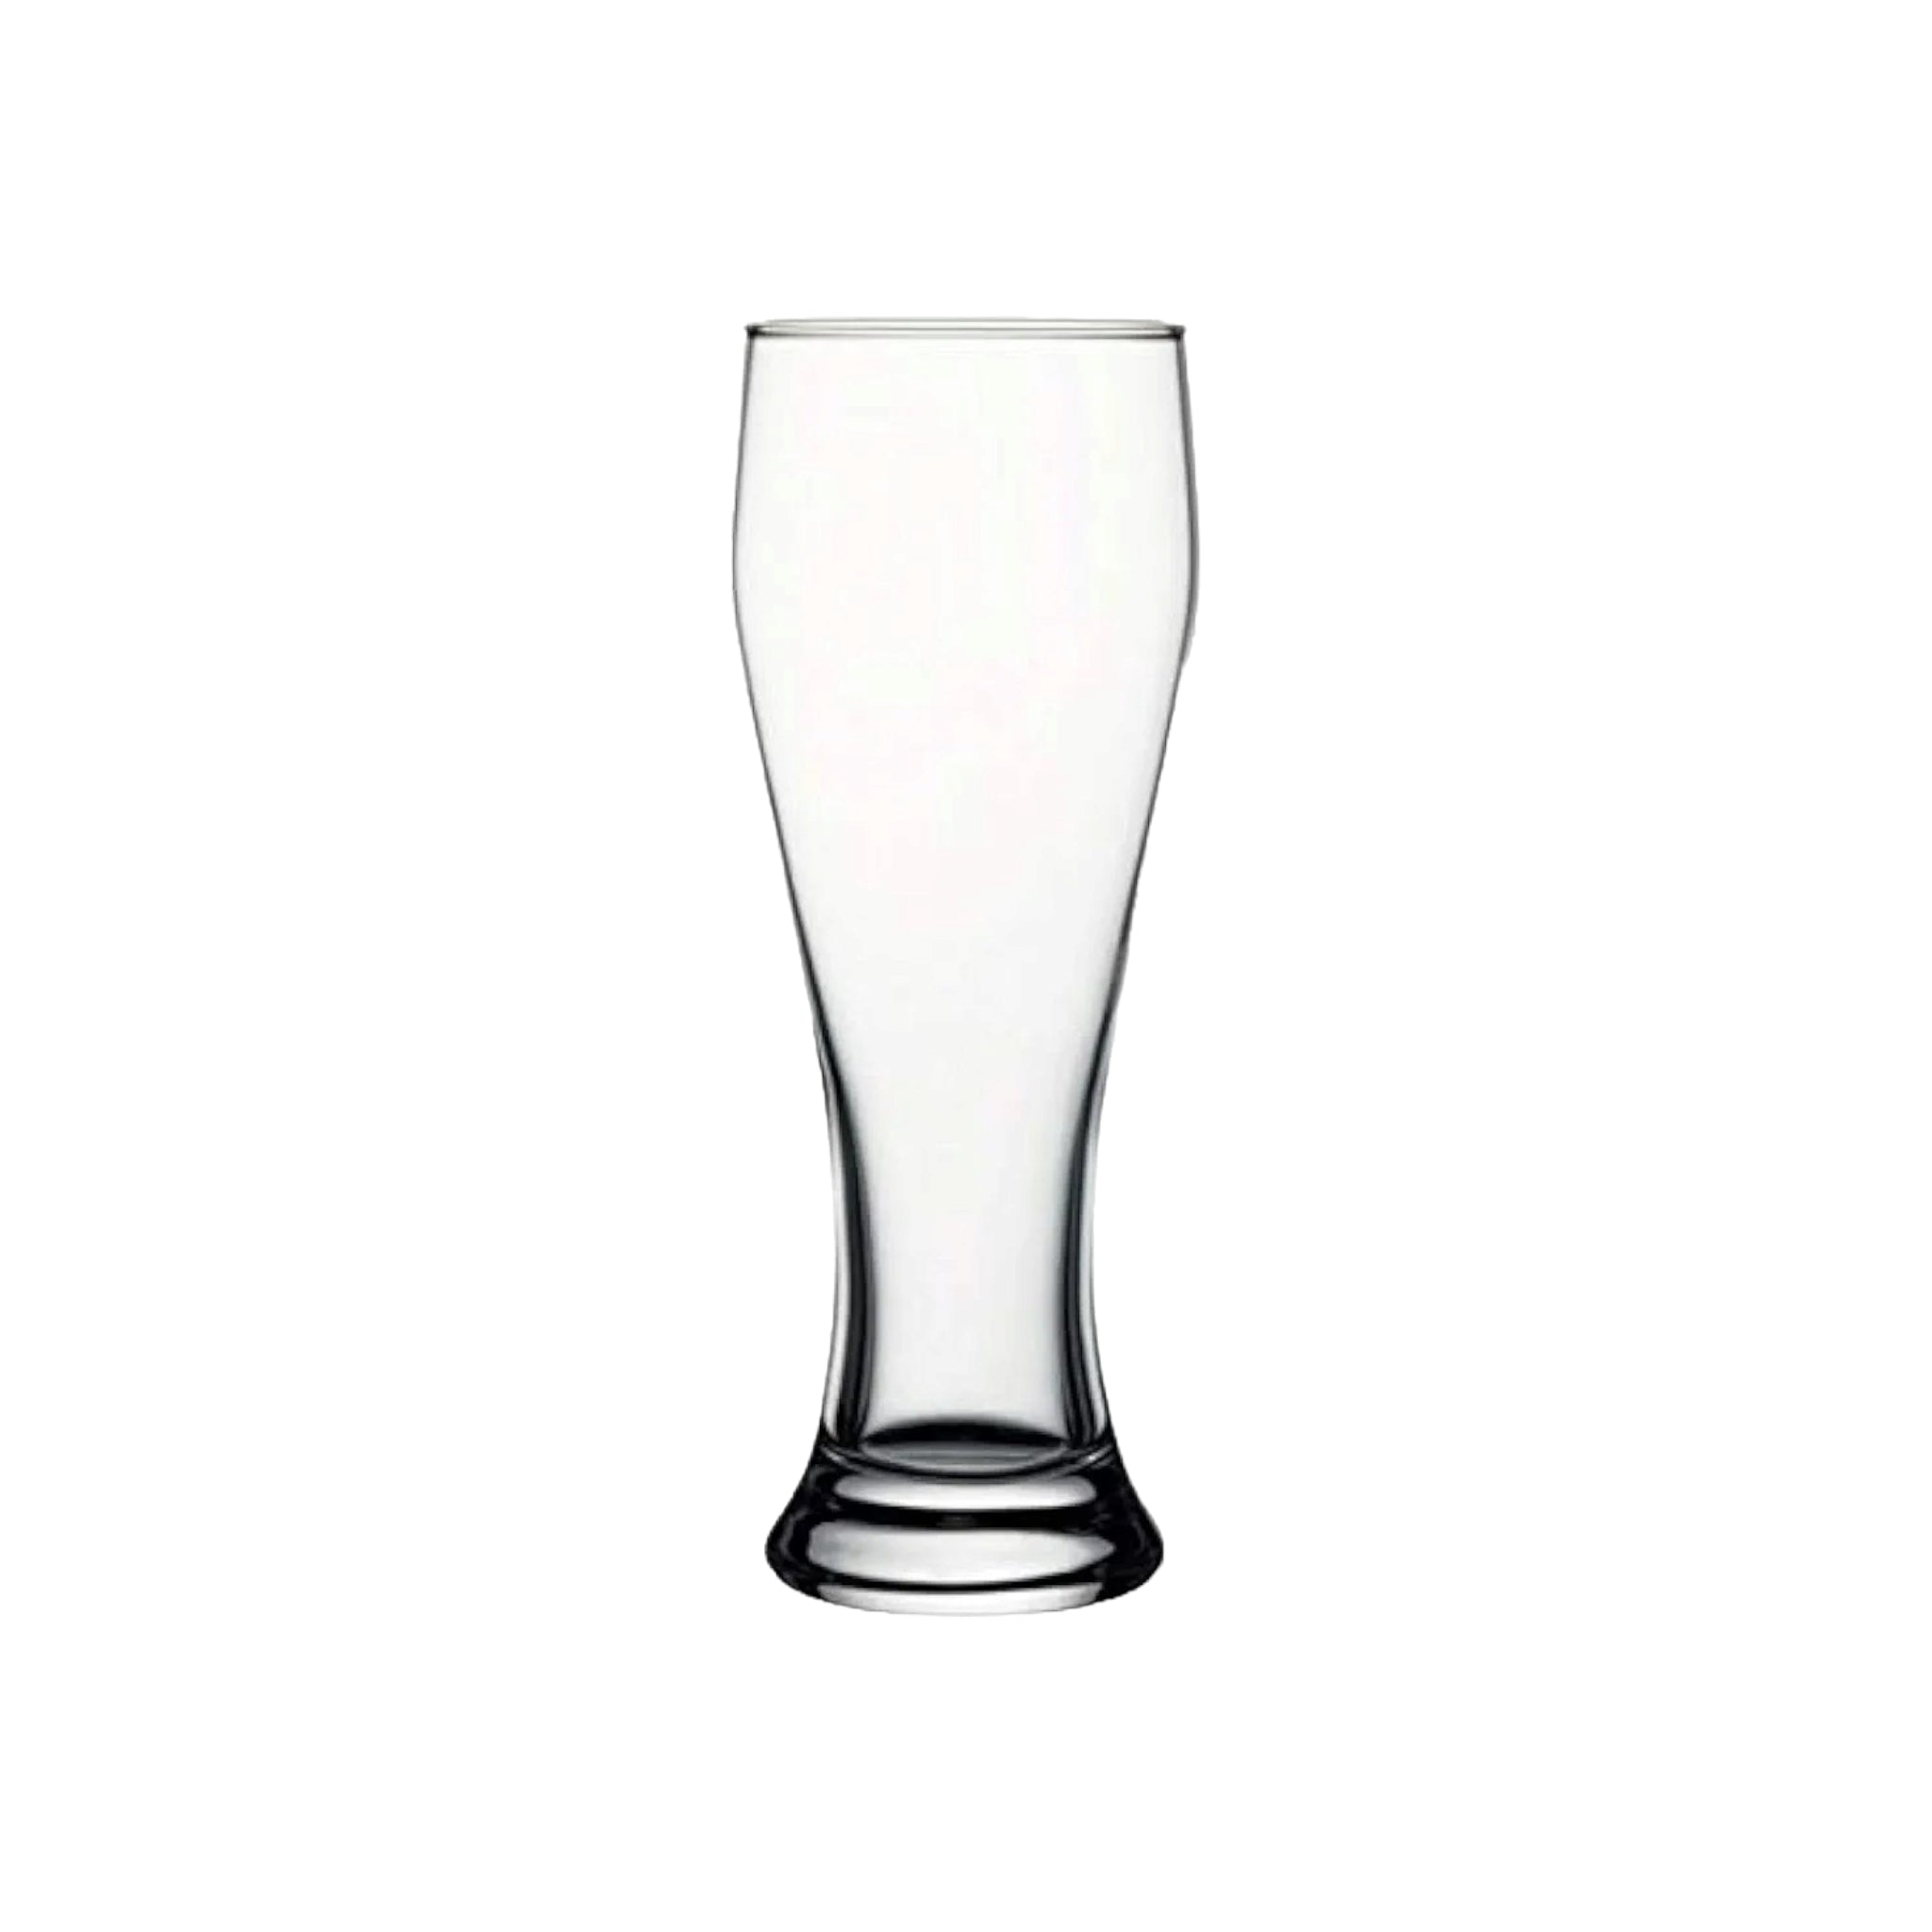 Weissen Service Line Glass Tumbler 415ml Beer Mug 4pc